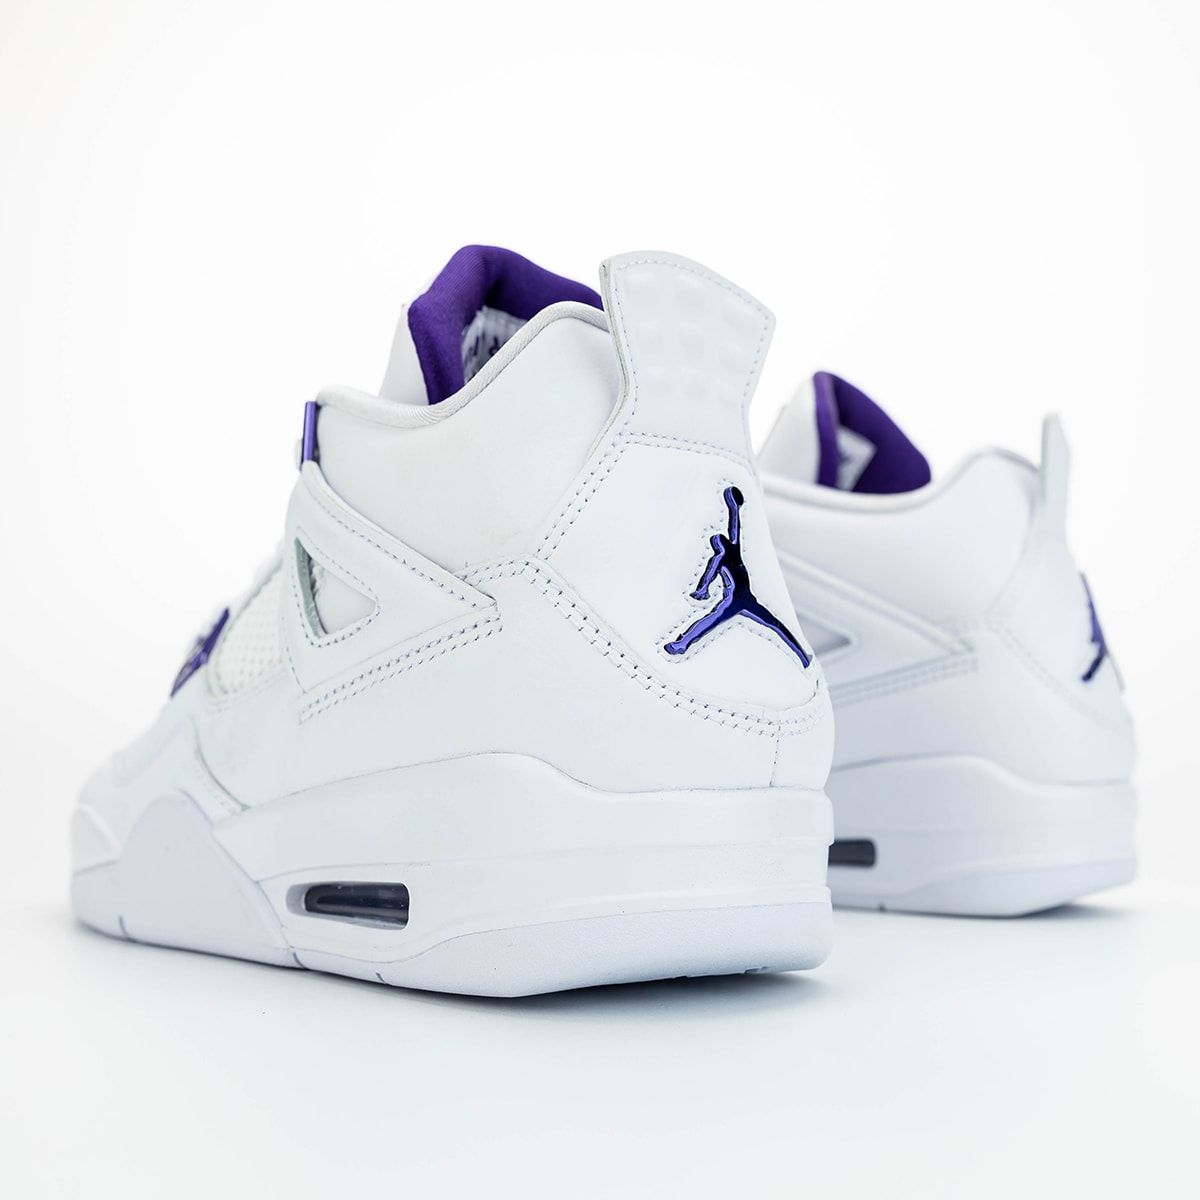 court purple 4s release date